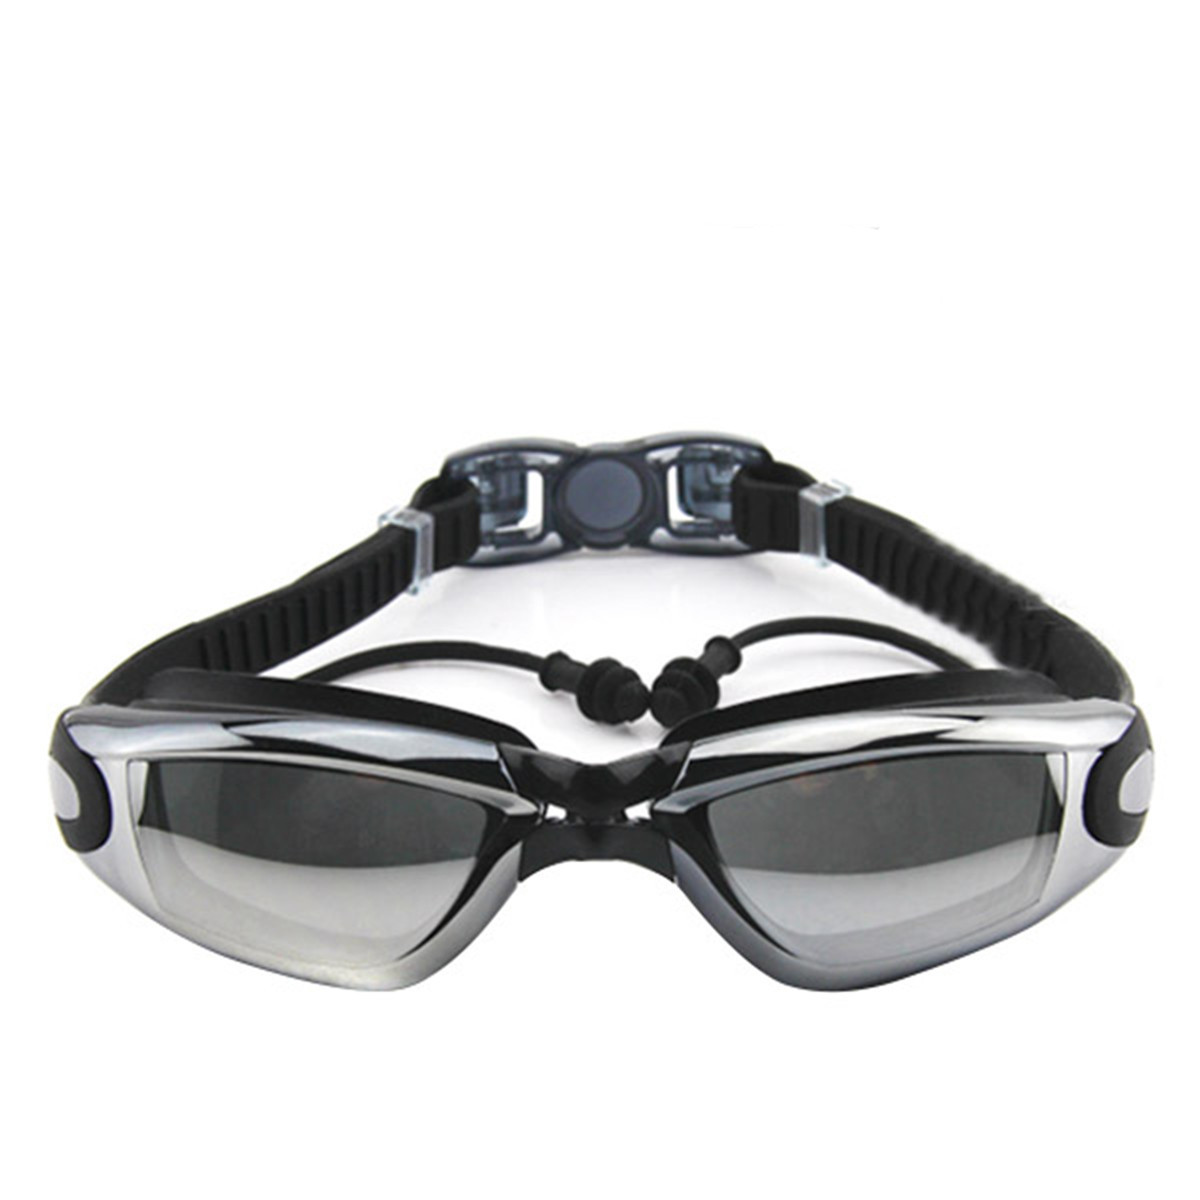 Swimming-Goggles-with-Earplug-Waterproof-Anti-Fog-Mirrored-Large-Frame-HD-Goggles-for-Men-Women-1884381-3